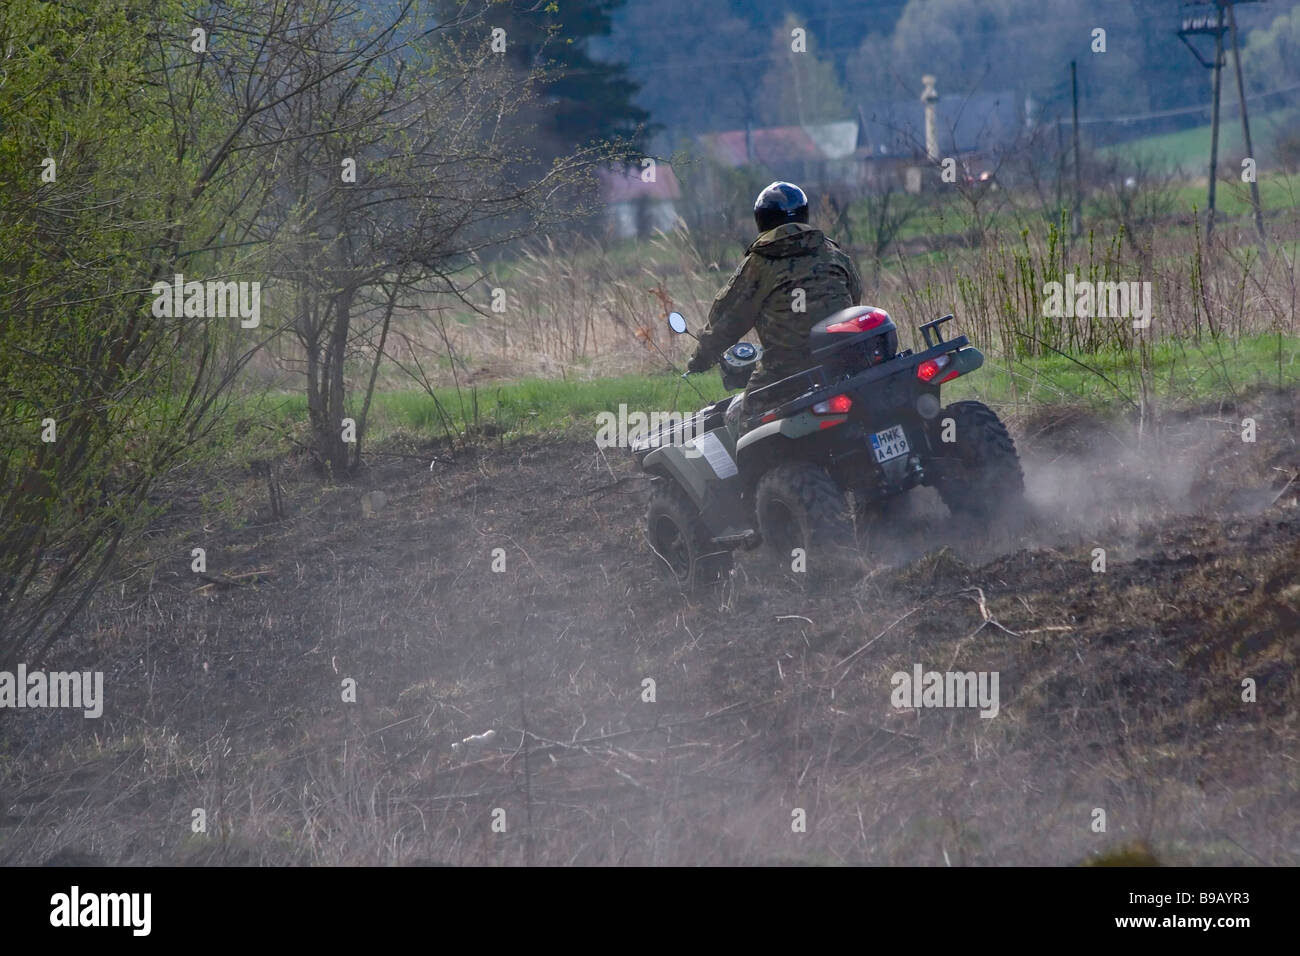 Poland, Bieszczady, Man riding quadbike through marshland Stock Photo